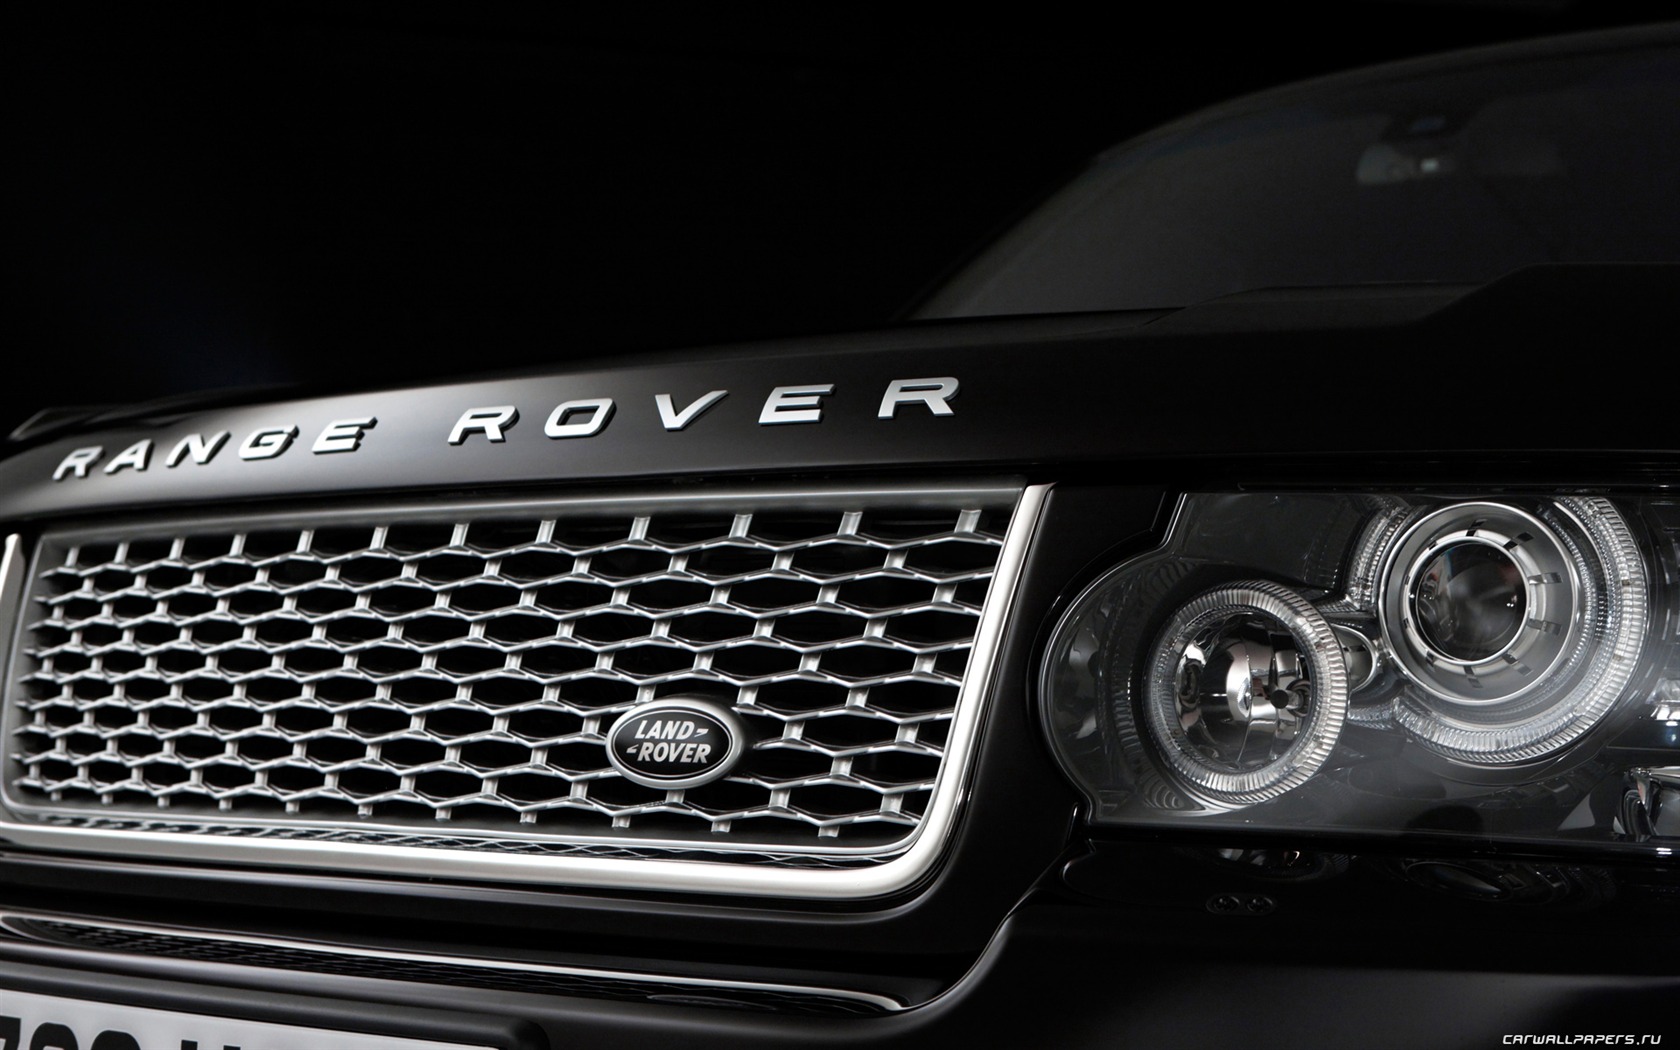 Land Rover Range Rover Black Edition - 2011 路虎21 - 1680x1050